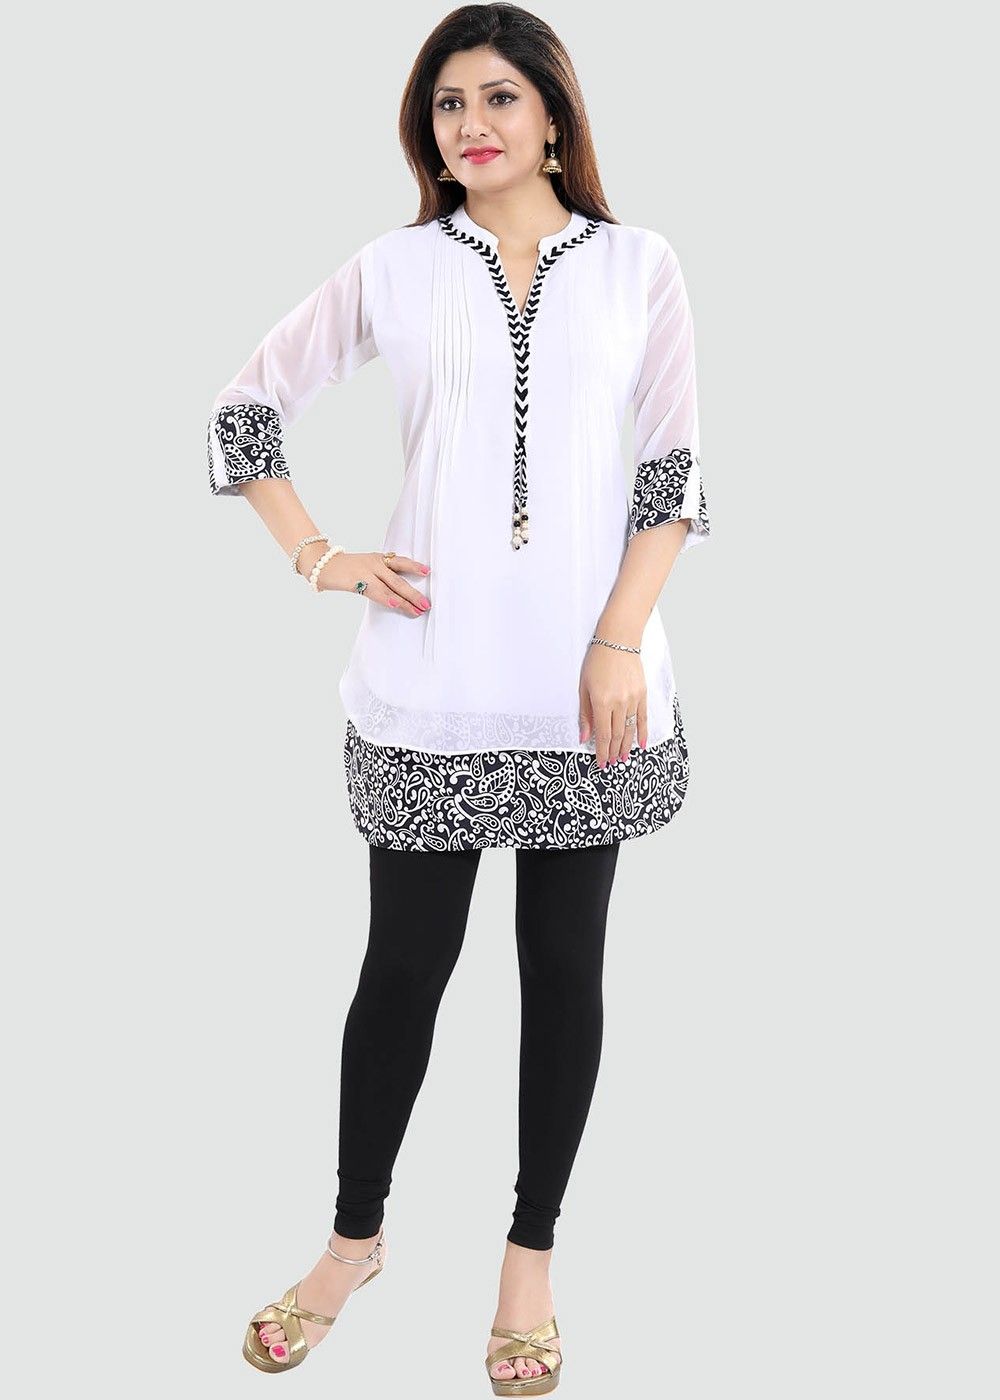 Indian Hippe Beige Floral Cotton Kurti Women's Clothing Kurti Girls Kurti M  Size | eBay